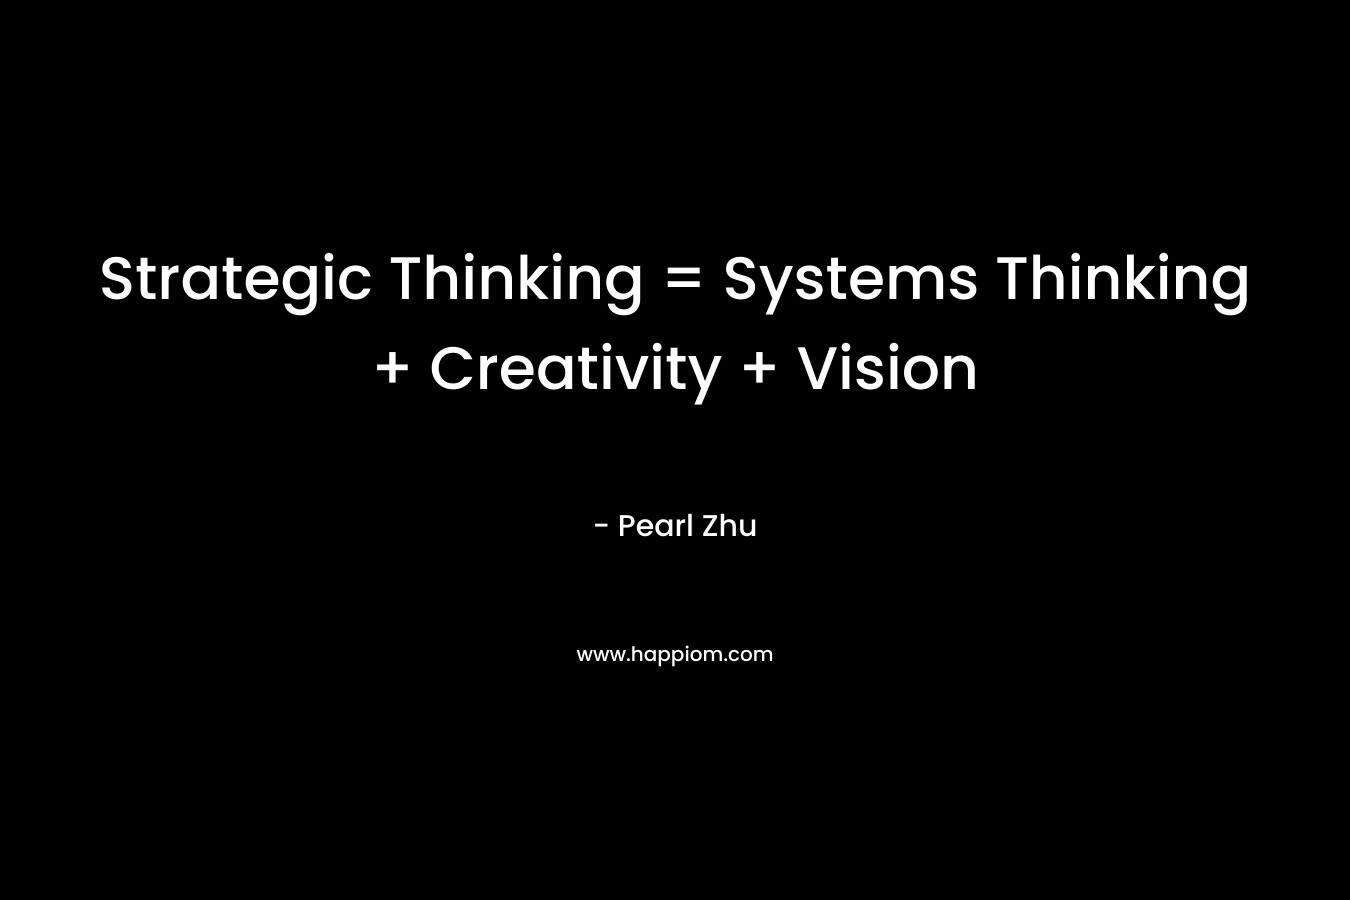 Strategic Thinking = Systems Thinking + Creativity + Vision